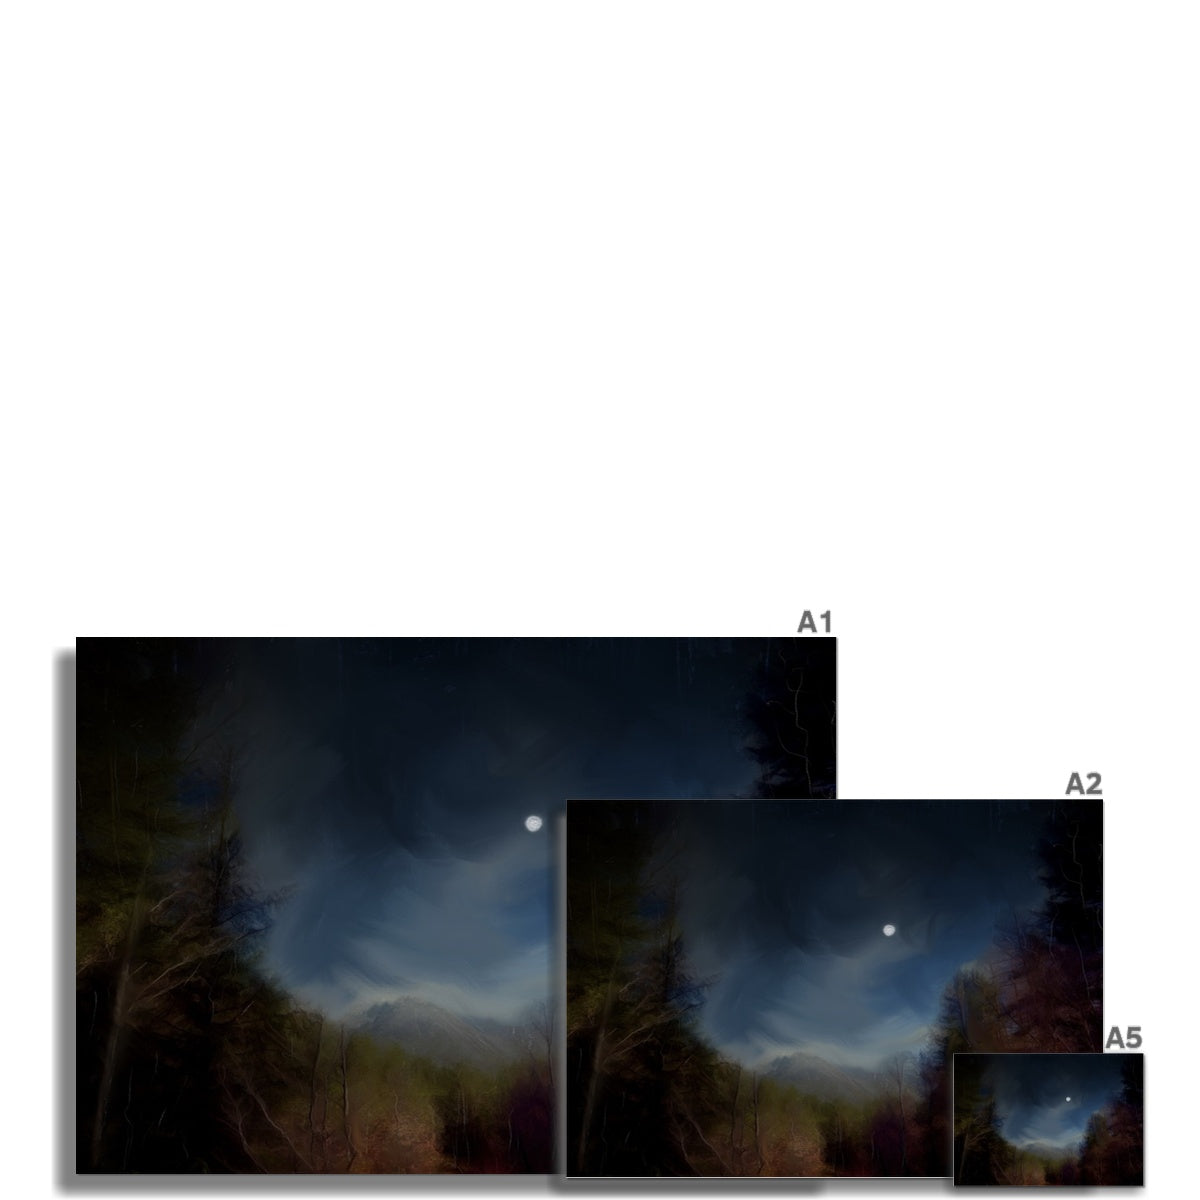 Glencoe Lochan Moonlight Painting | Fine Art Prints From Scotland-Unframed Prints-Scottish Lochs & Mountains Art Gallery-Paintings, Prints, Homeware, Art Gifts From Scotland By Scottish Artist Kevin Hunter